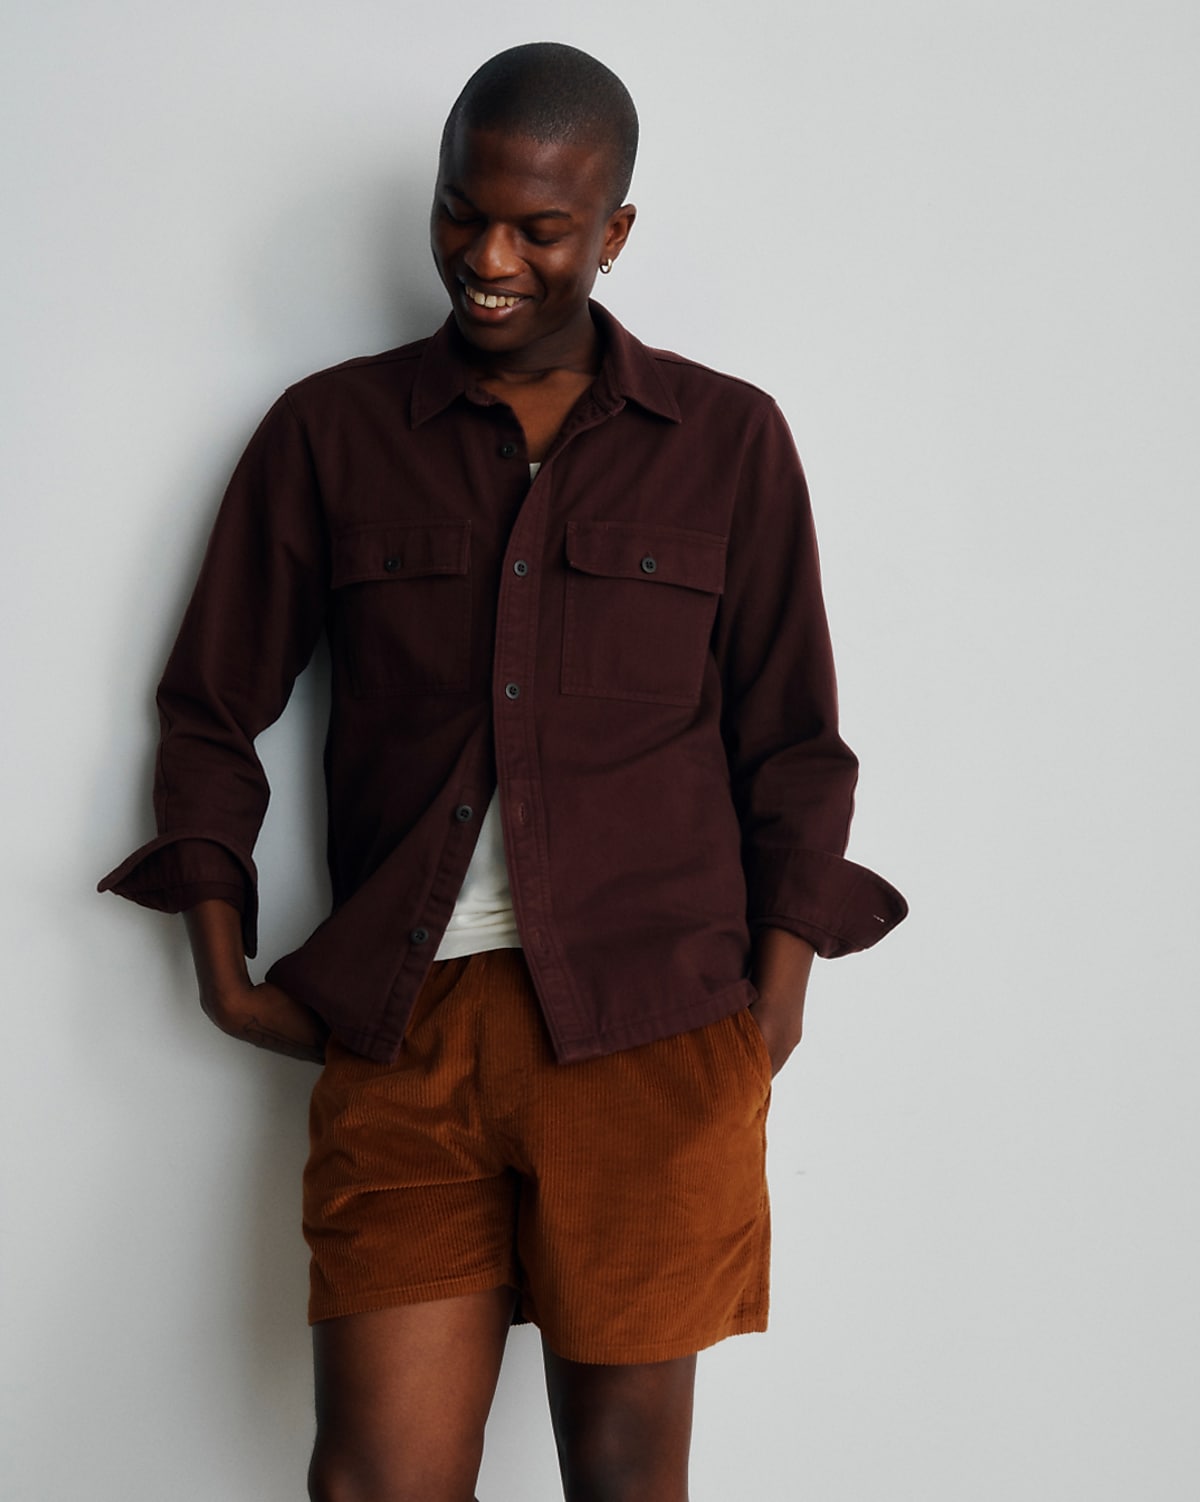 man wearing marron shirt and desert colored shorts